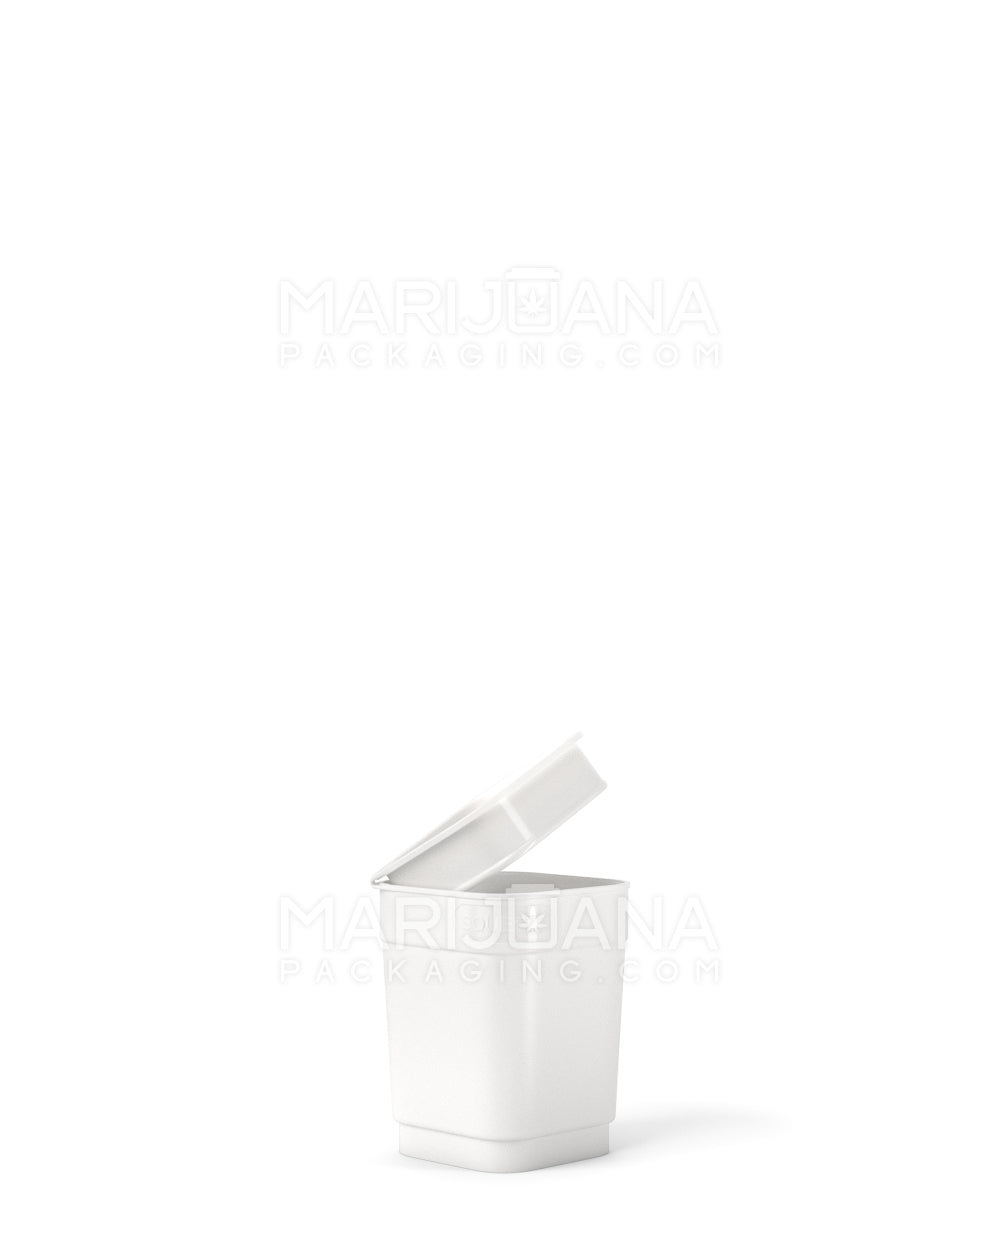 POLLEN GEAR | 100% Recyclable Opaque White Pop Box Pop Top Bottles | 6dr - 1g - 1632 Count - 1